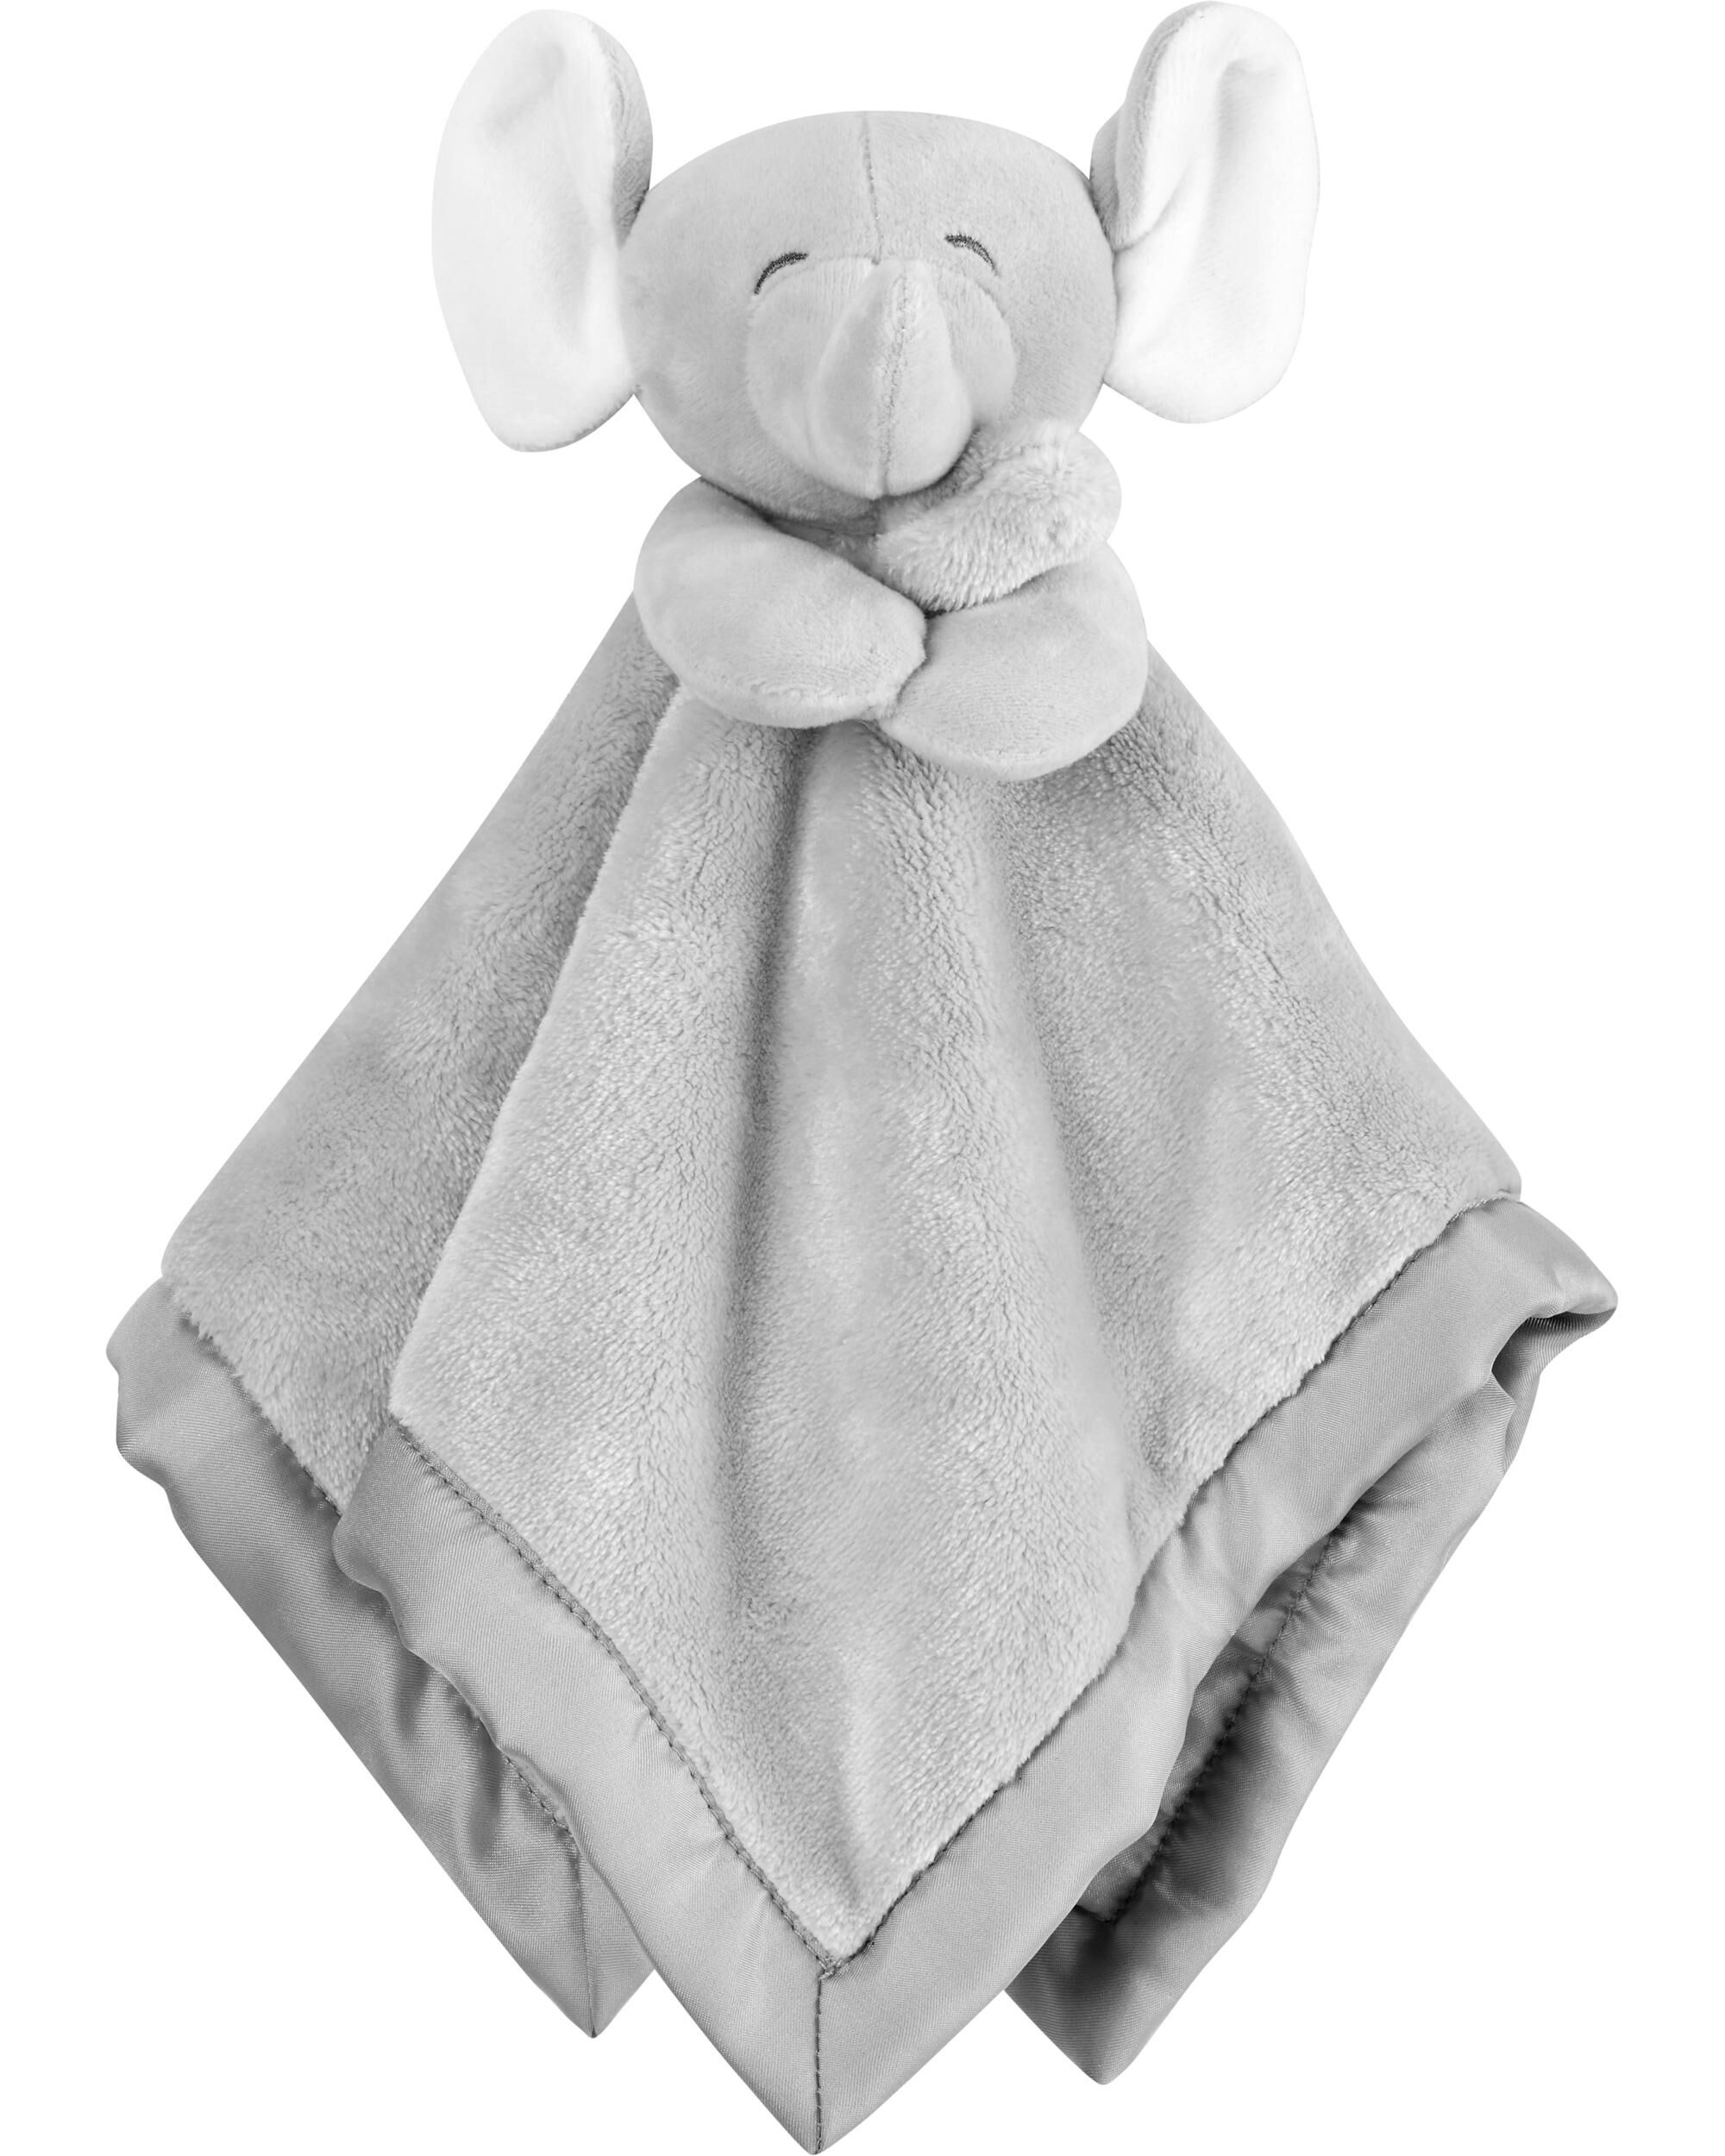 Carters Baby Elephant Security Blanket